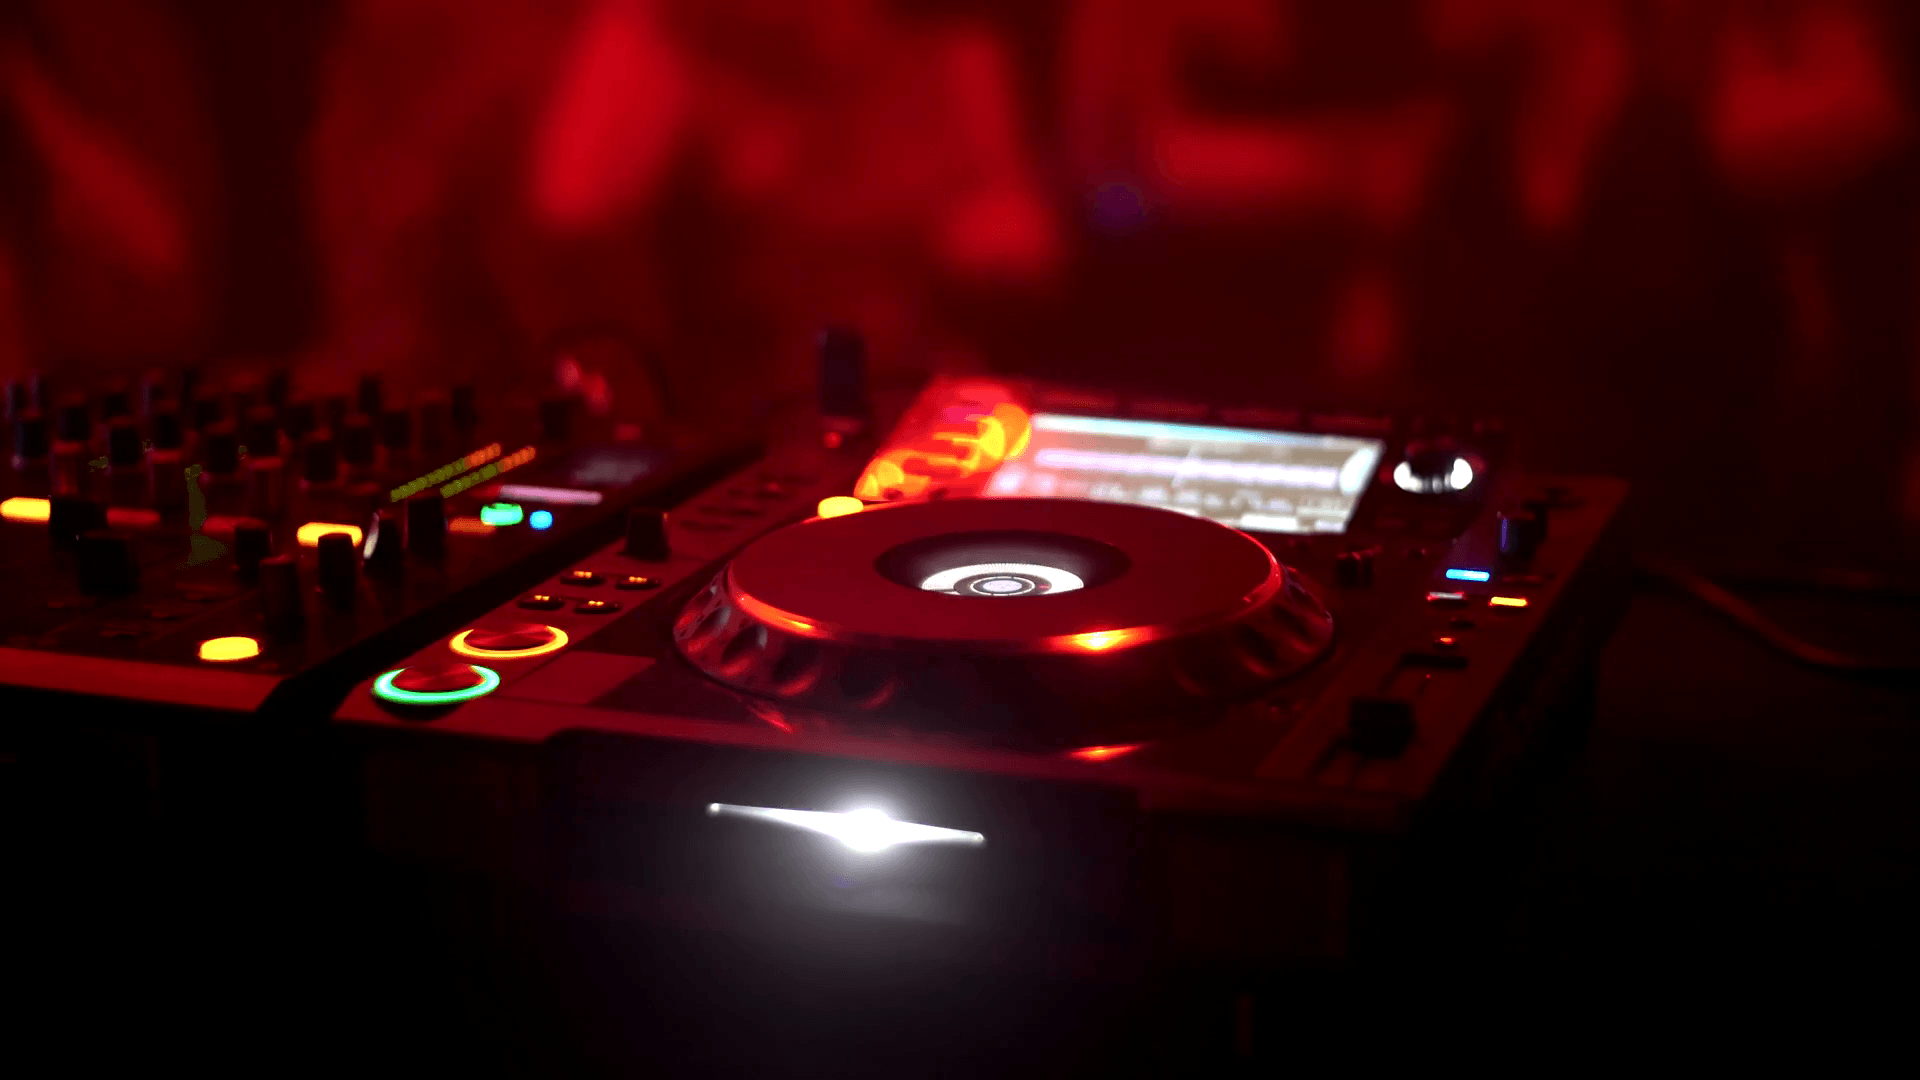 DJ disk jockey mixing songs at his desk turntable in a nightclub